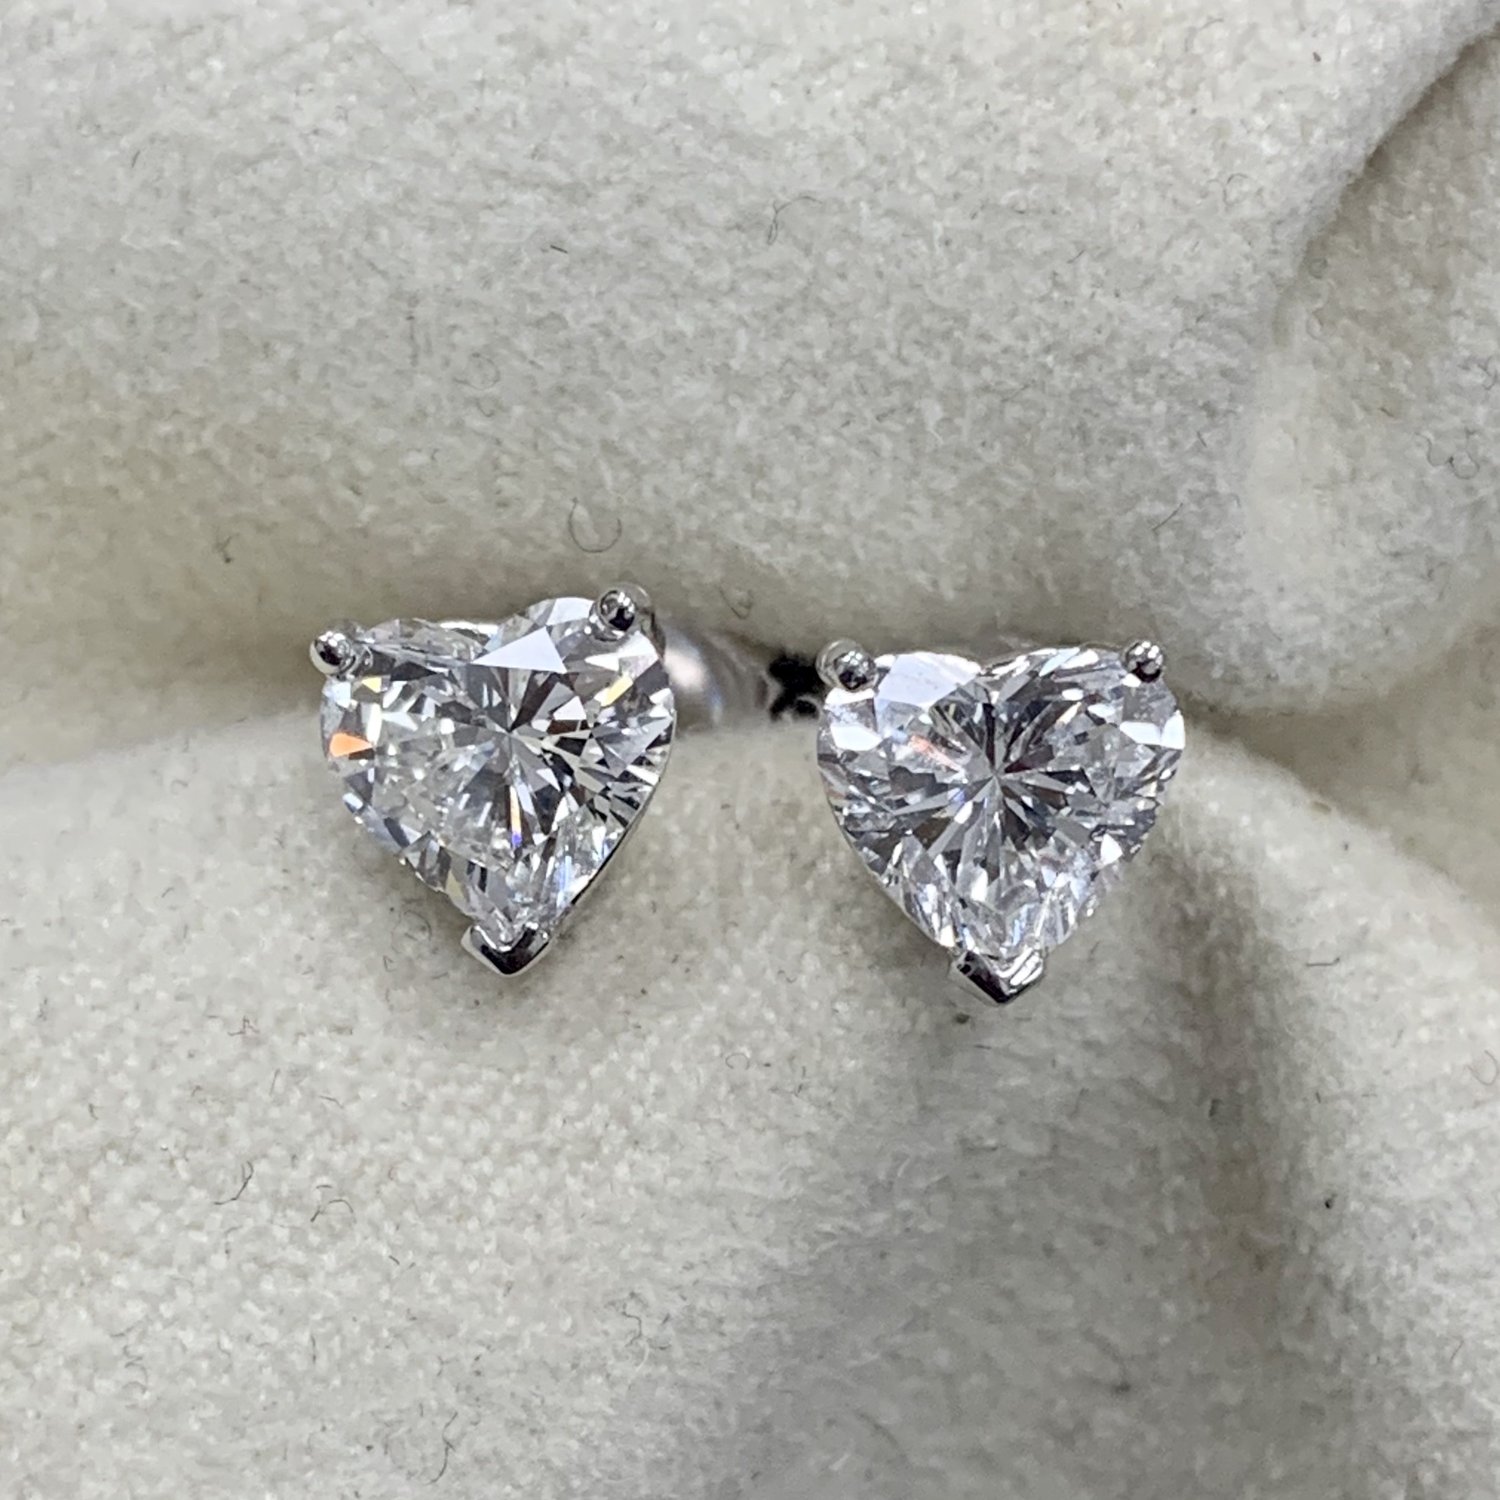 Details more than 85 diamond heart earrings best - esthdonghoadian